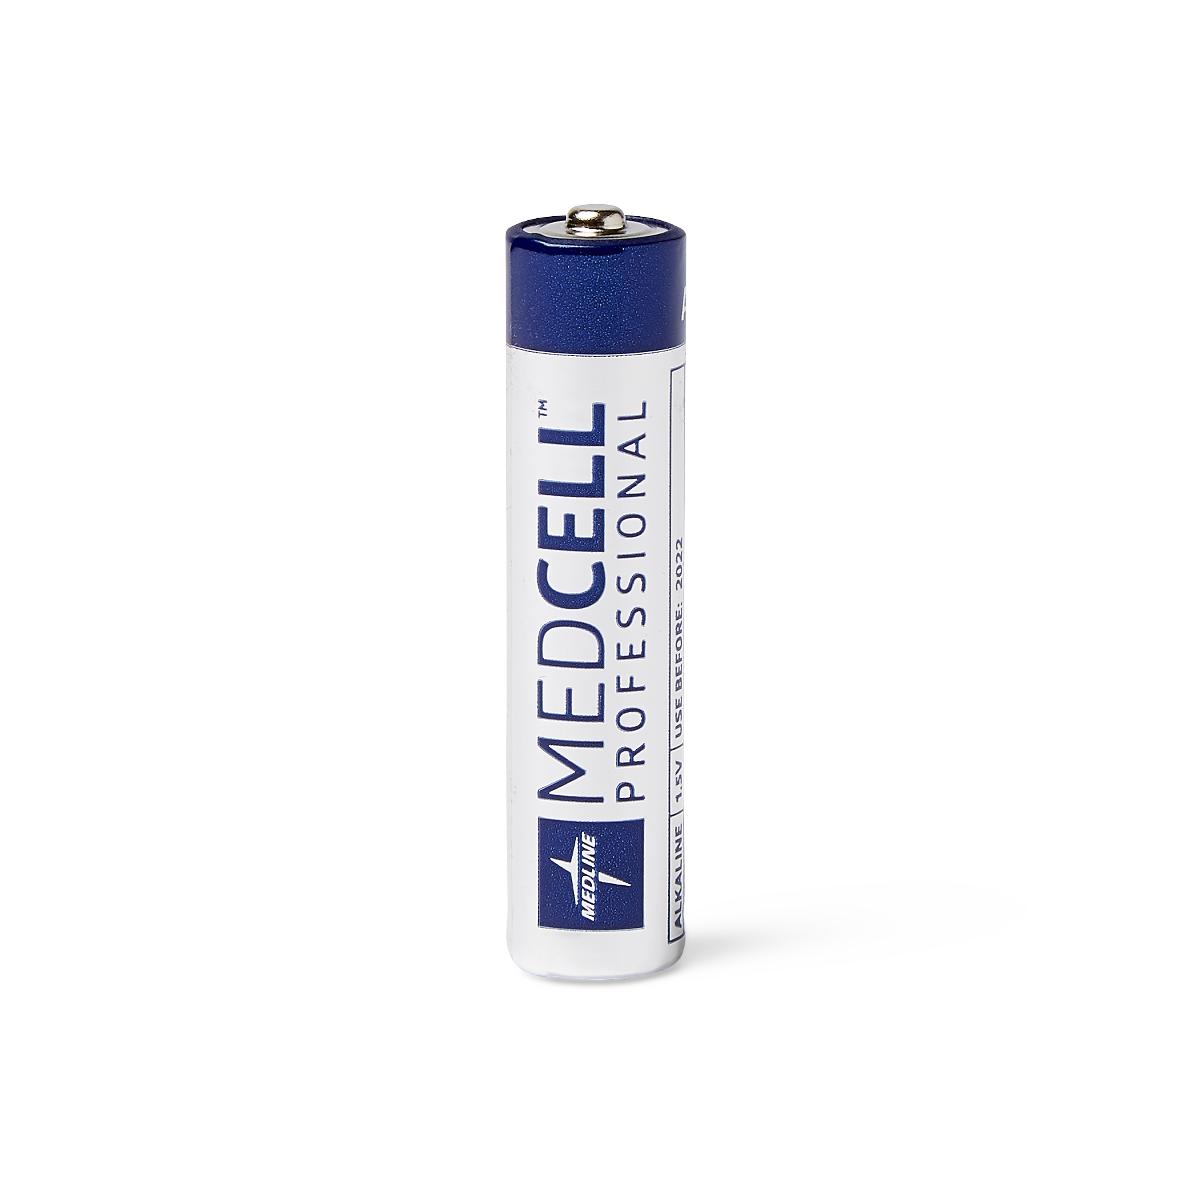 MedCell Alkaline Batteries,1.50 Case of 144